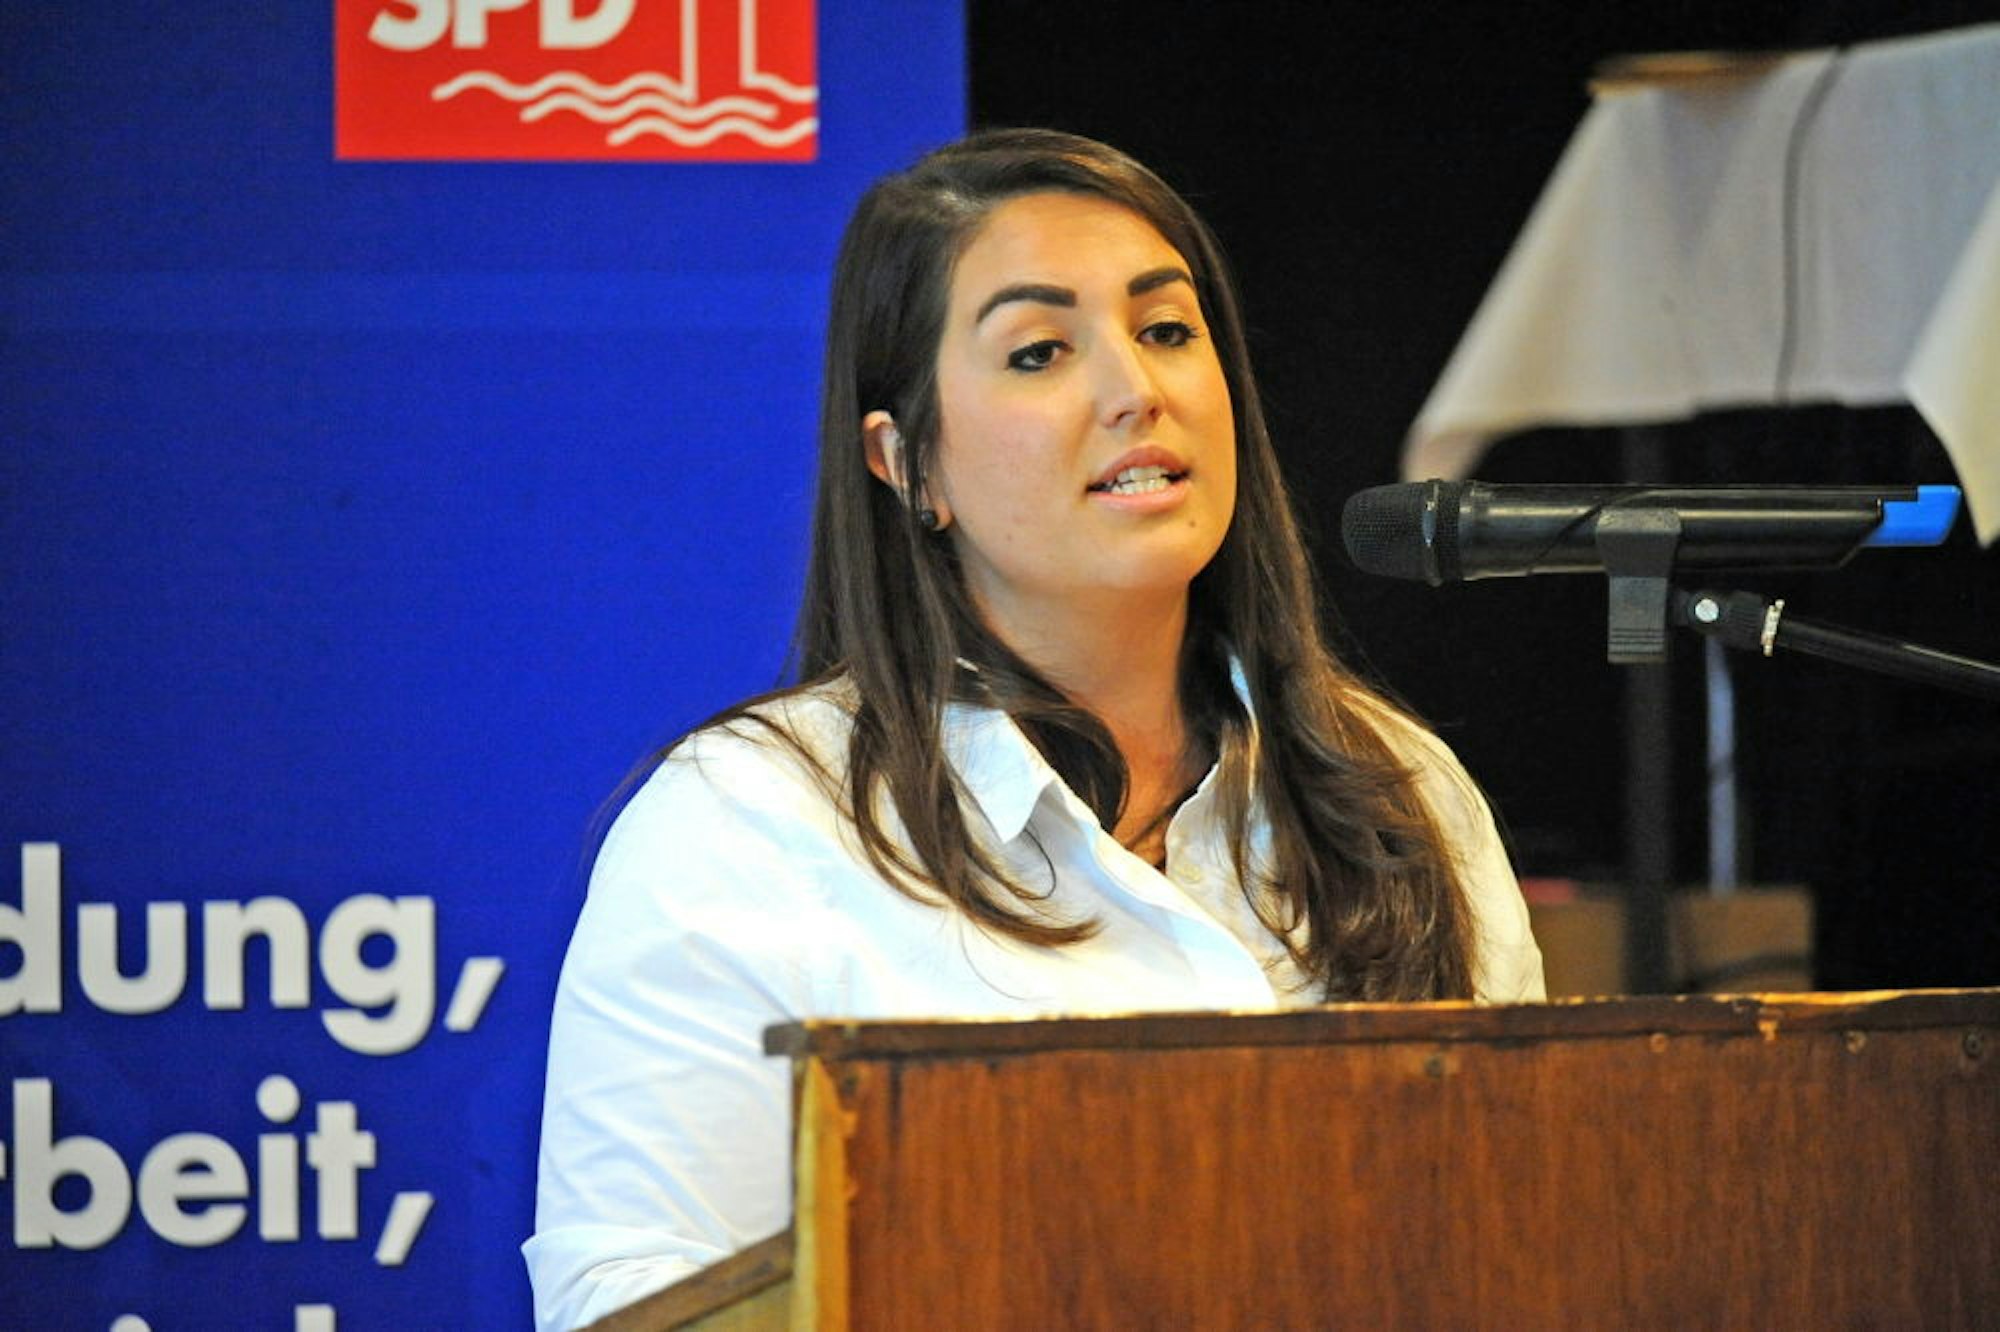 Aylin Doğan trat nach zwei Jahren entnervt den Rückzug an.